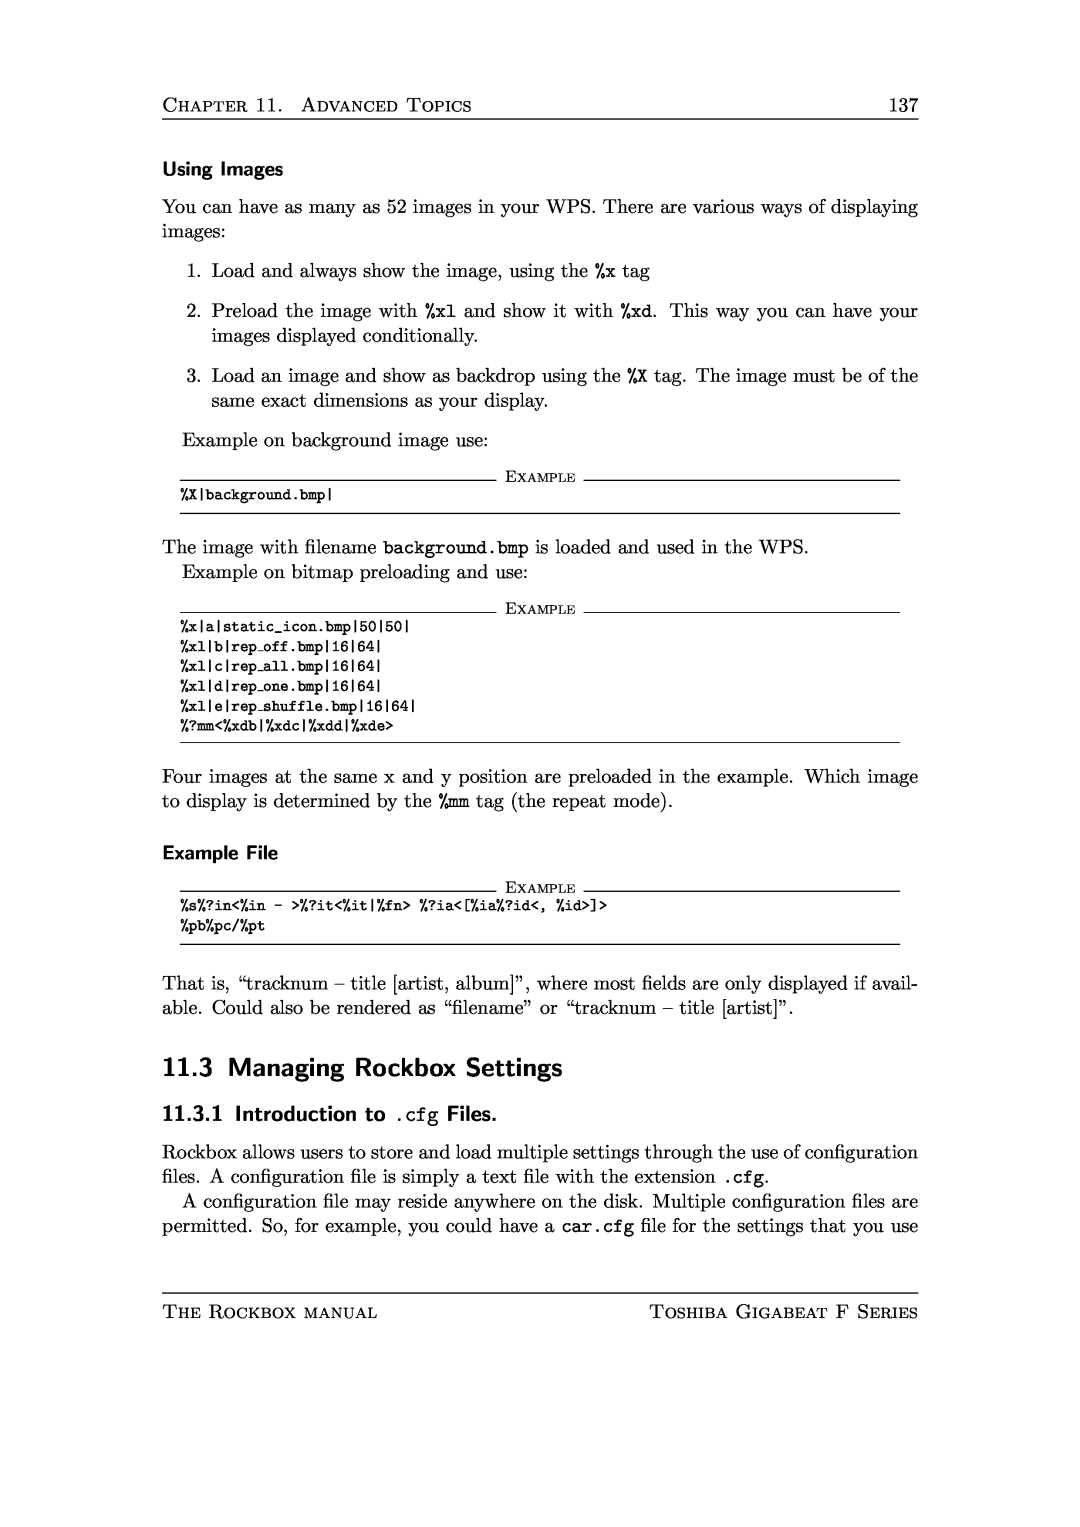 Toshiba F Series manual Managing Rockbox Settings, Introduction to .cfg Files 